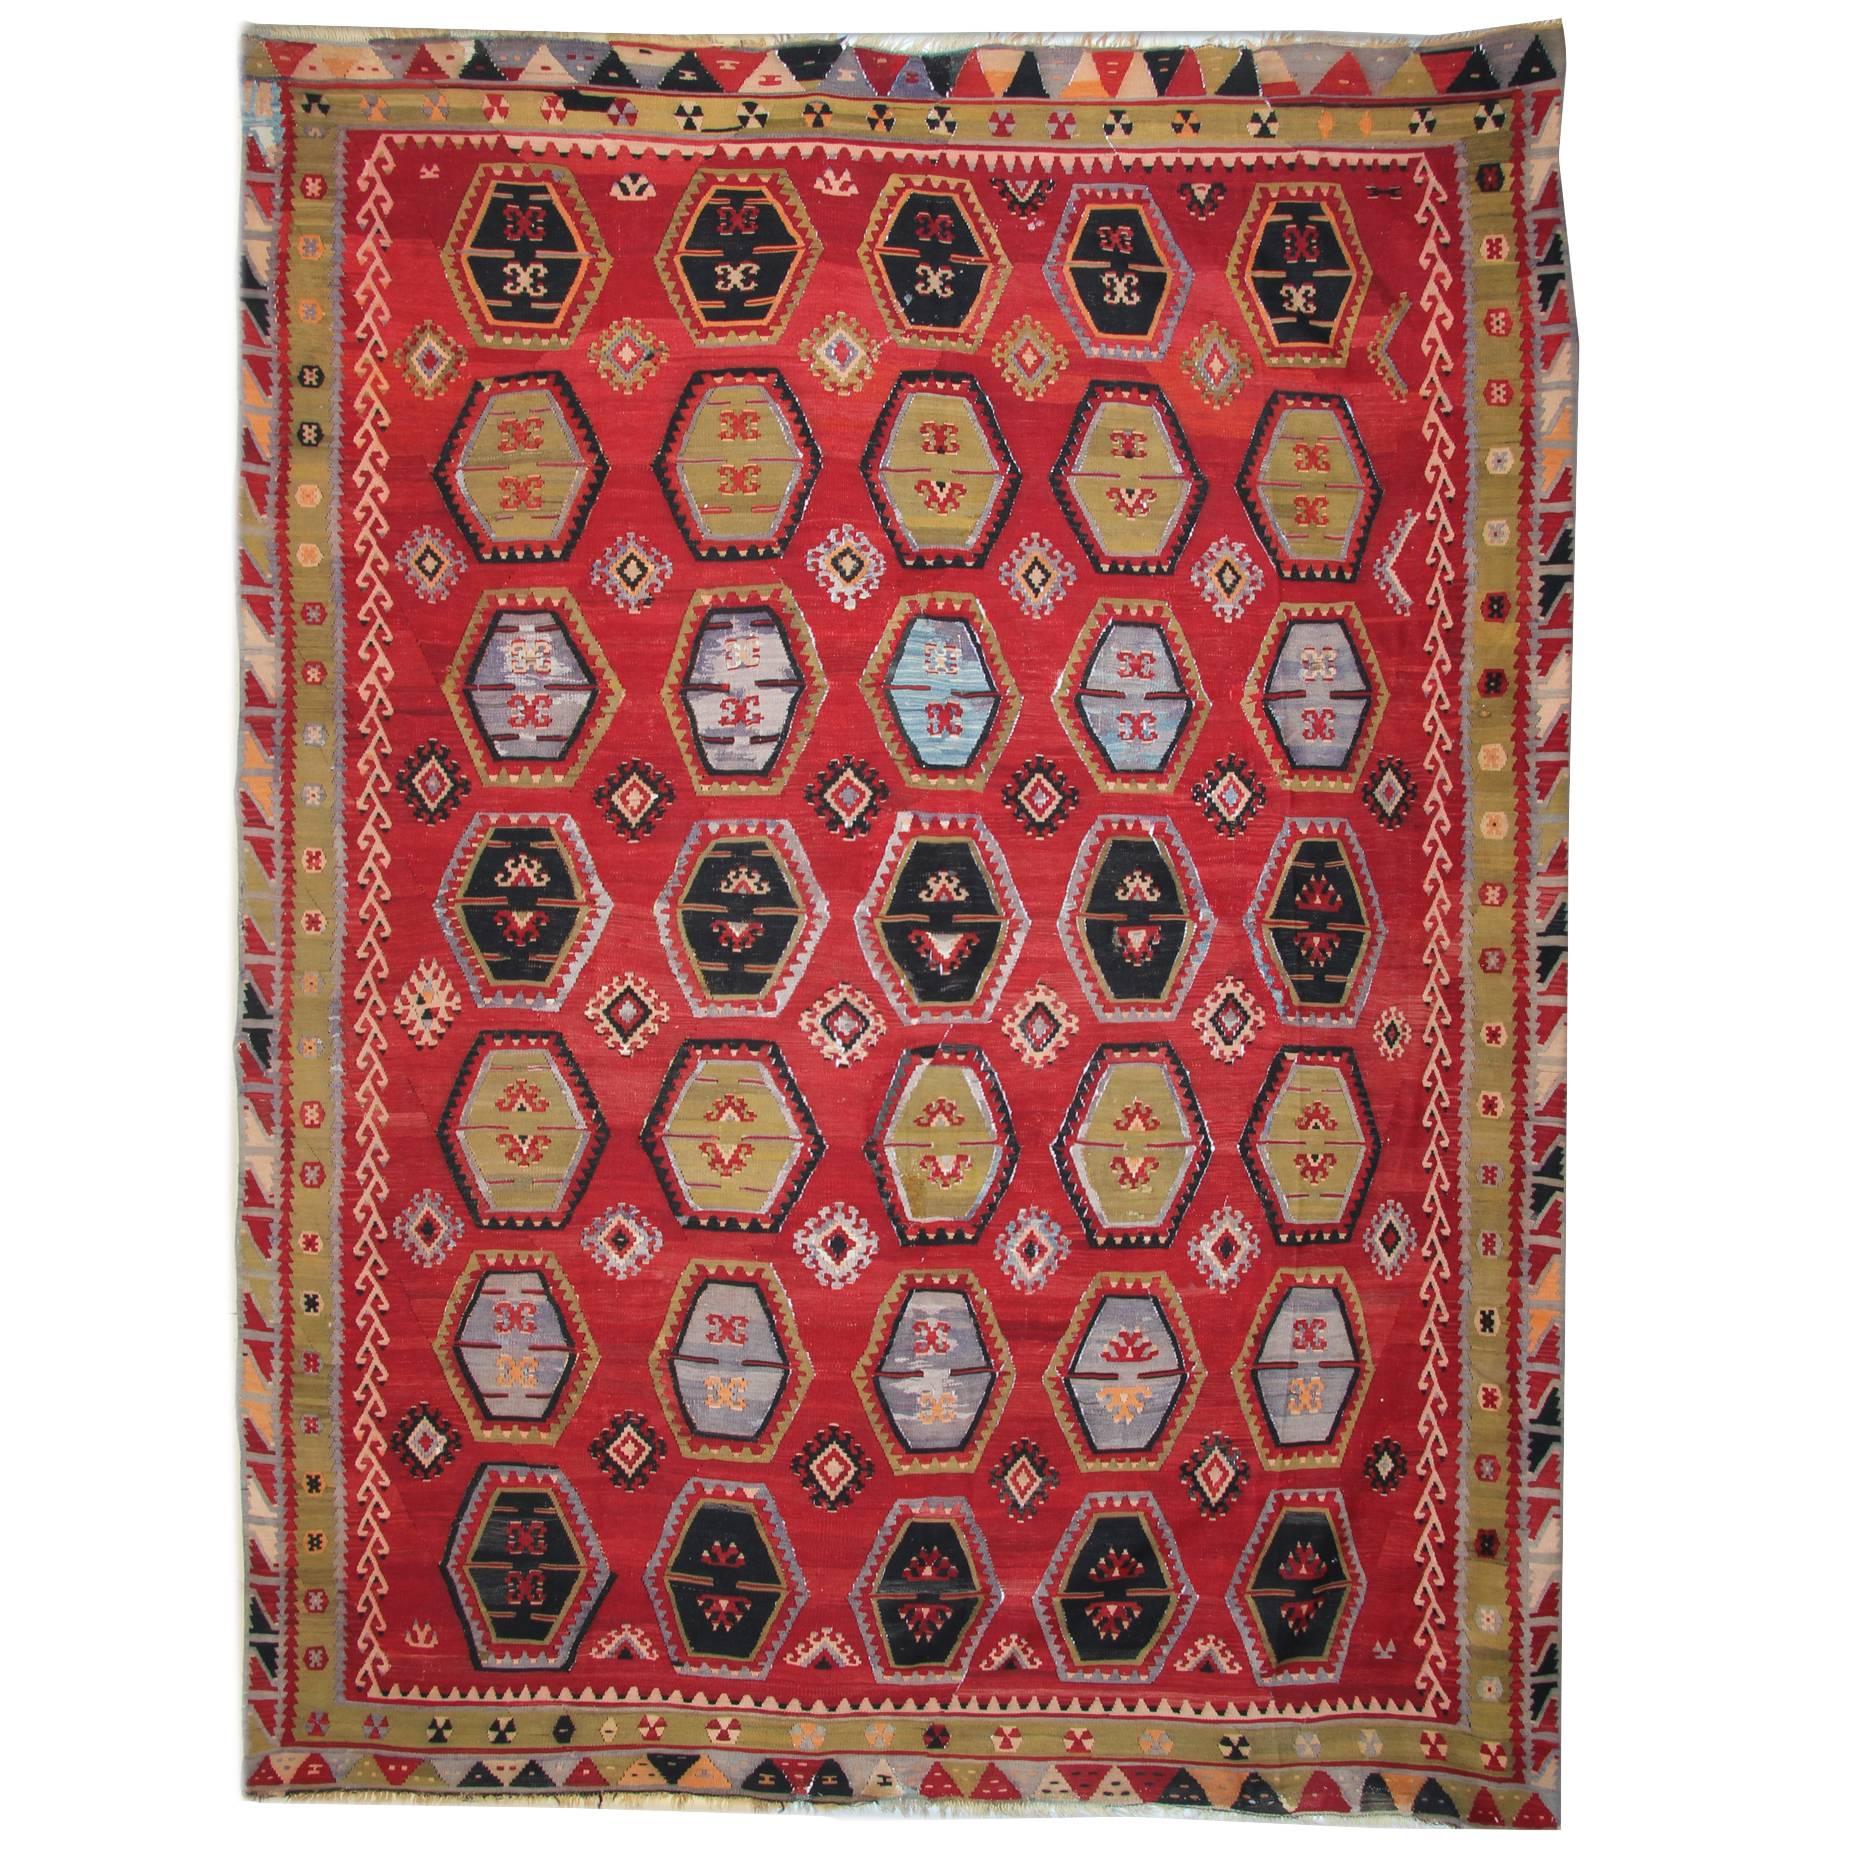 Antique Rugs, Turkish Kilim Rug, Sarkisla Carpet Rug from Anatolia